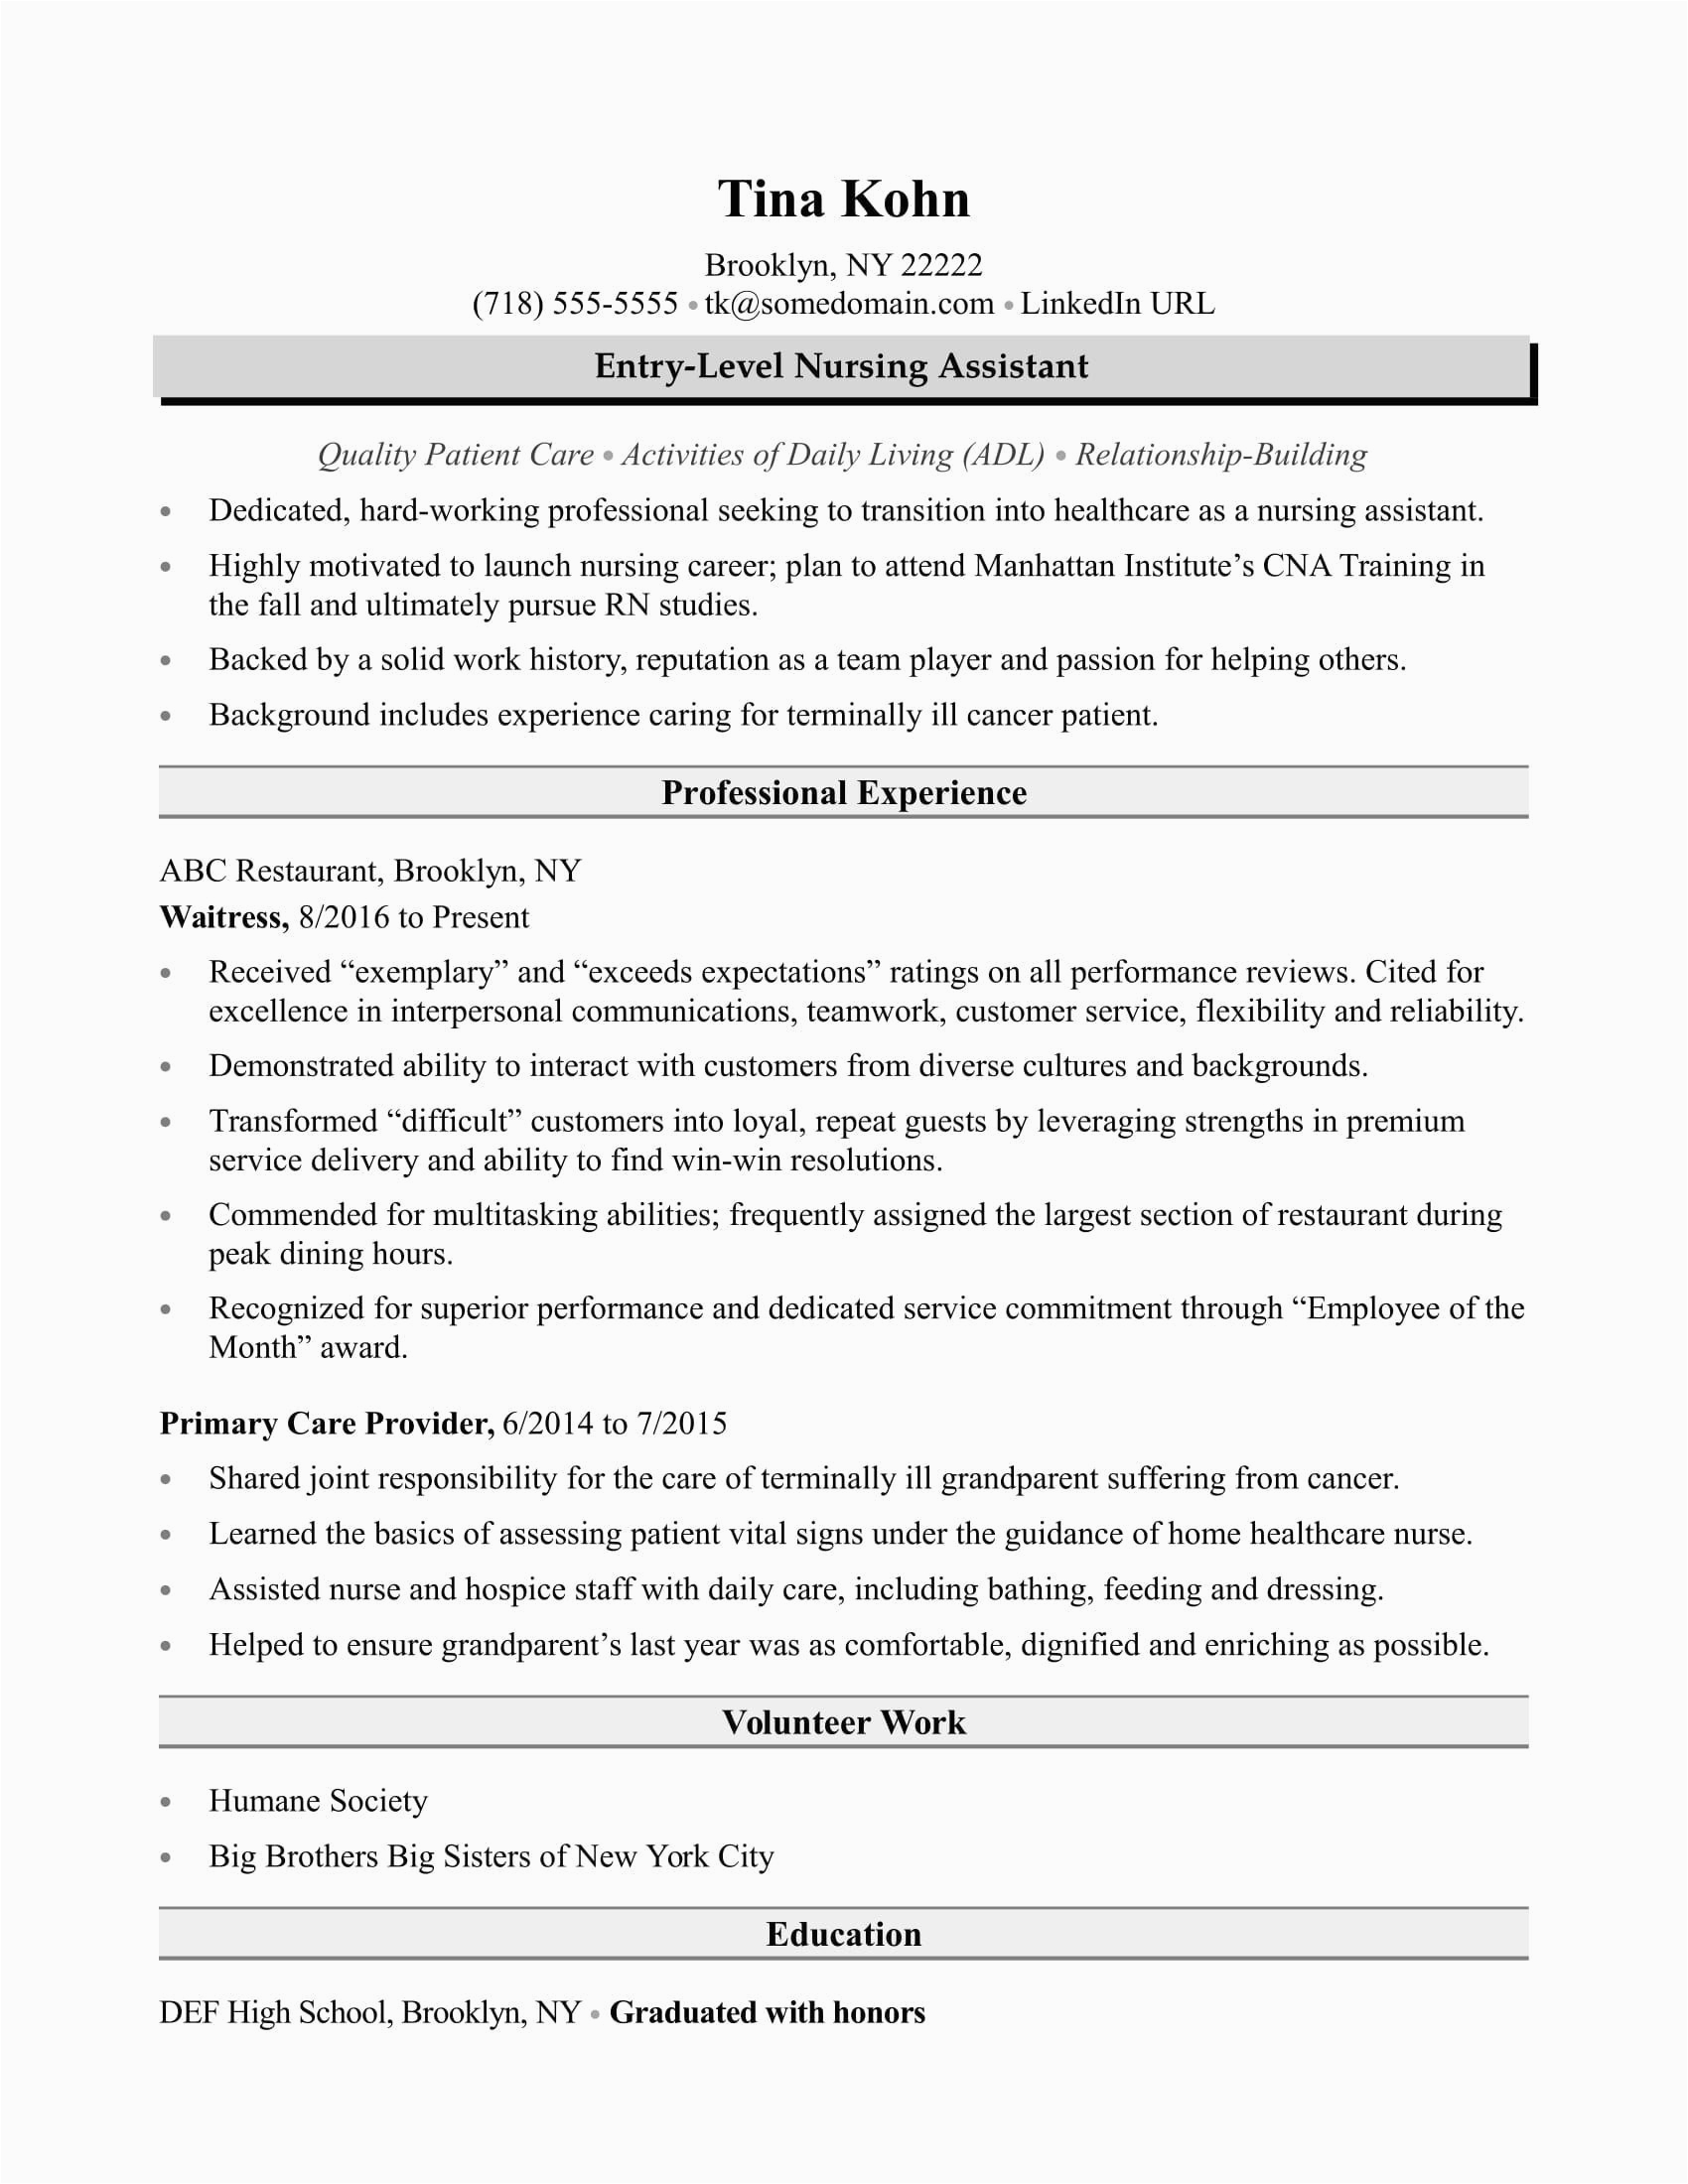 Sample Resume for Fresh Graduate Nurses with No Experience New Grad Rn Resume with No Experience Template Addictionary